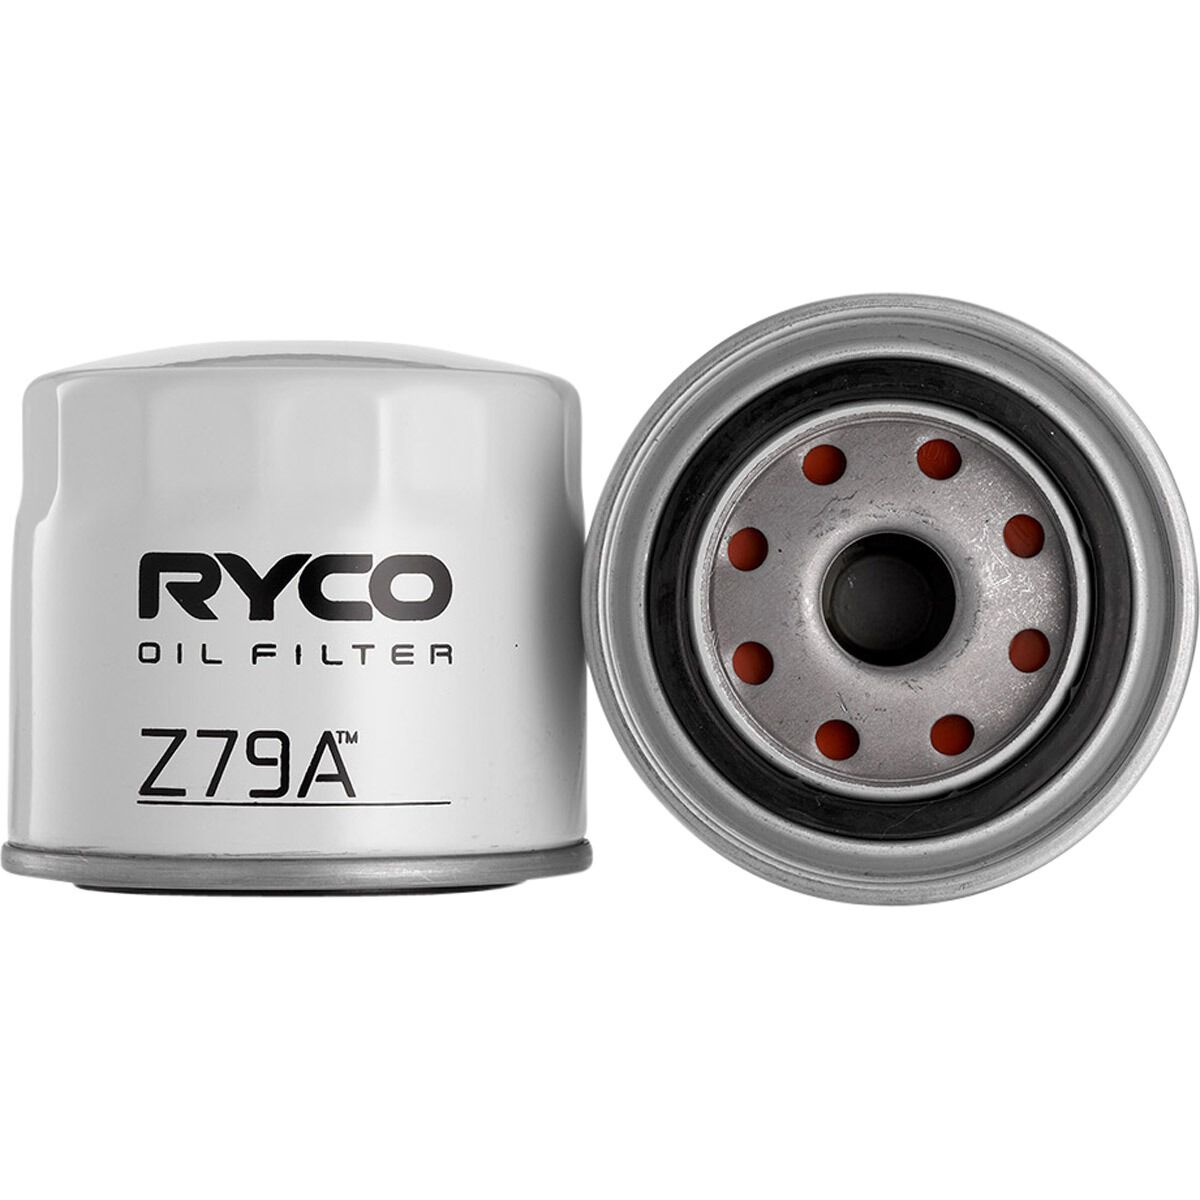 Ryco Oil Filter - Z79A, , scaau_hi-res